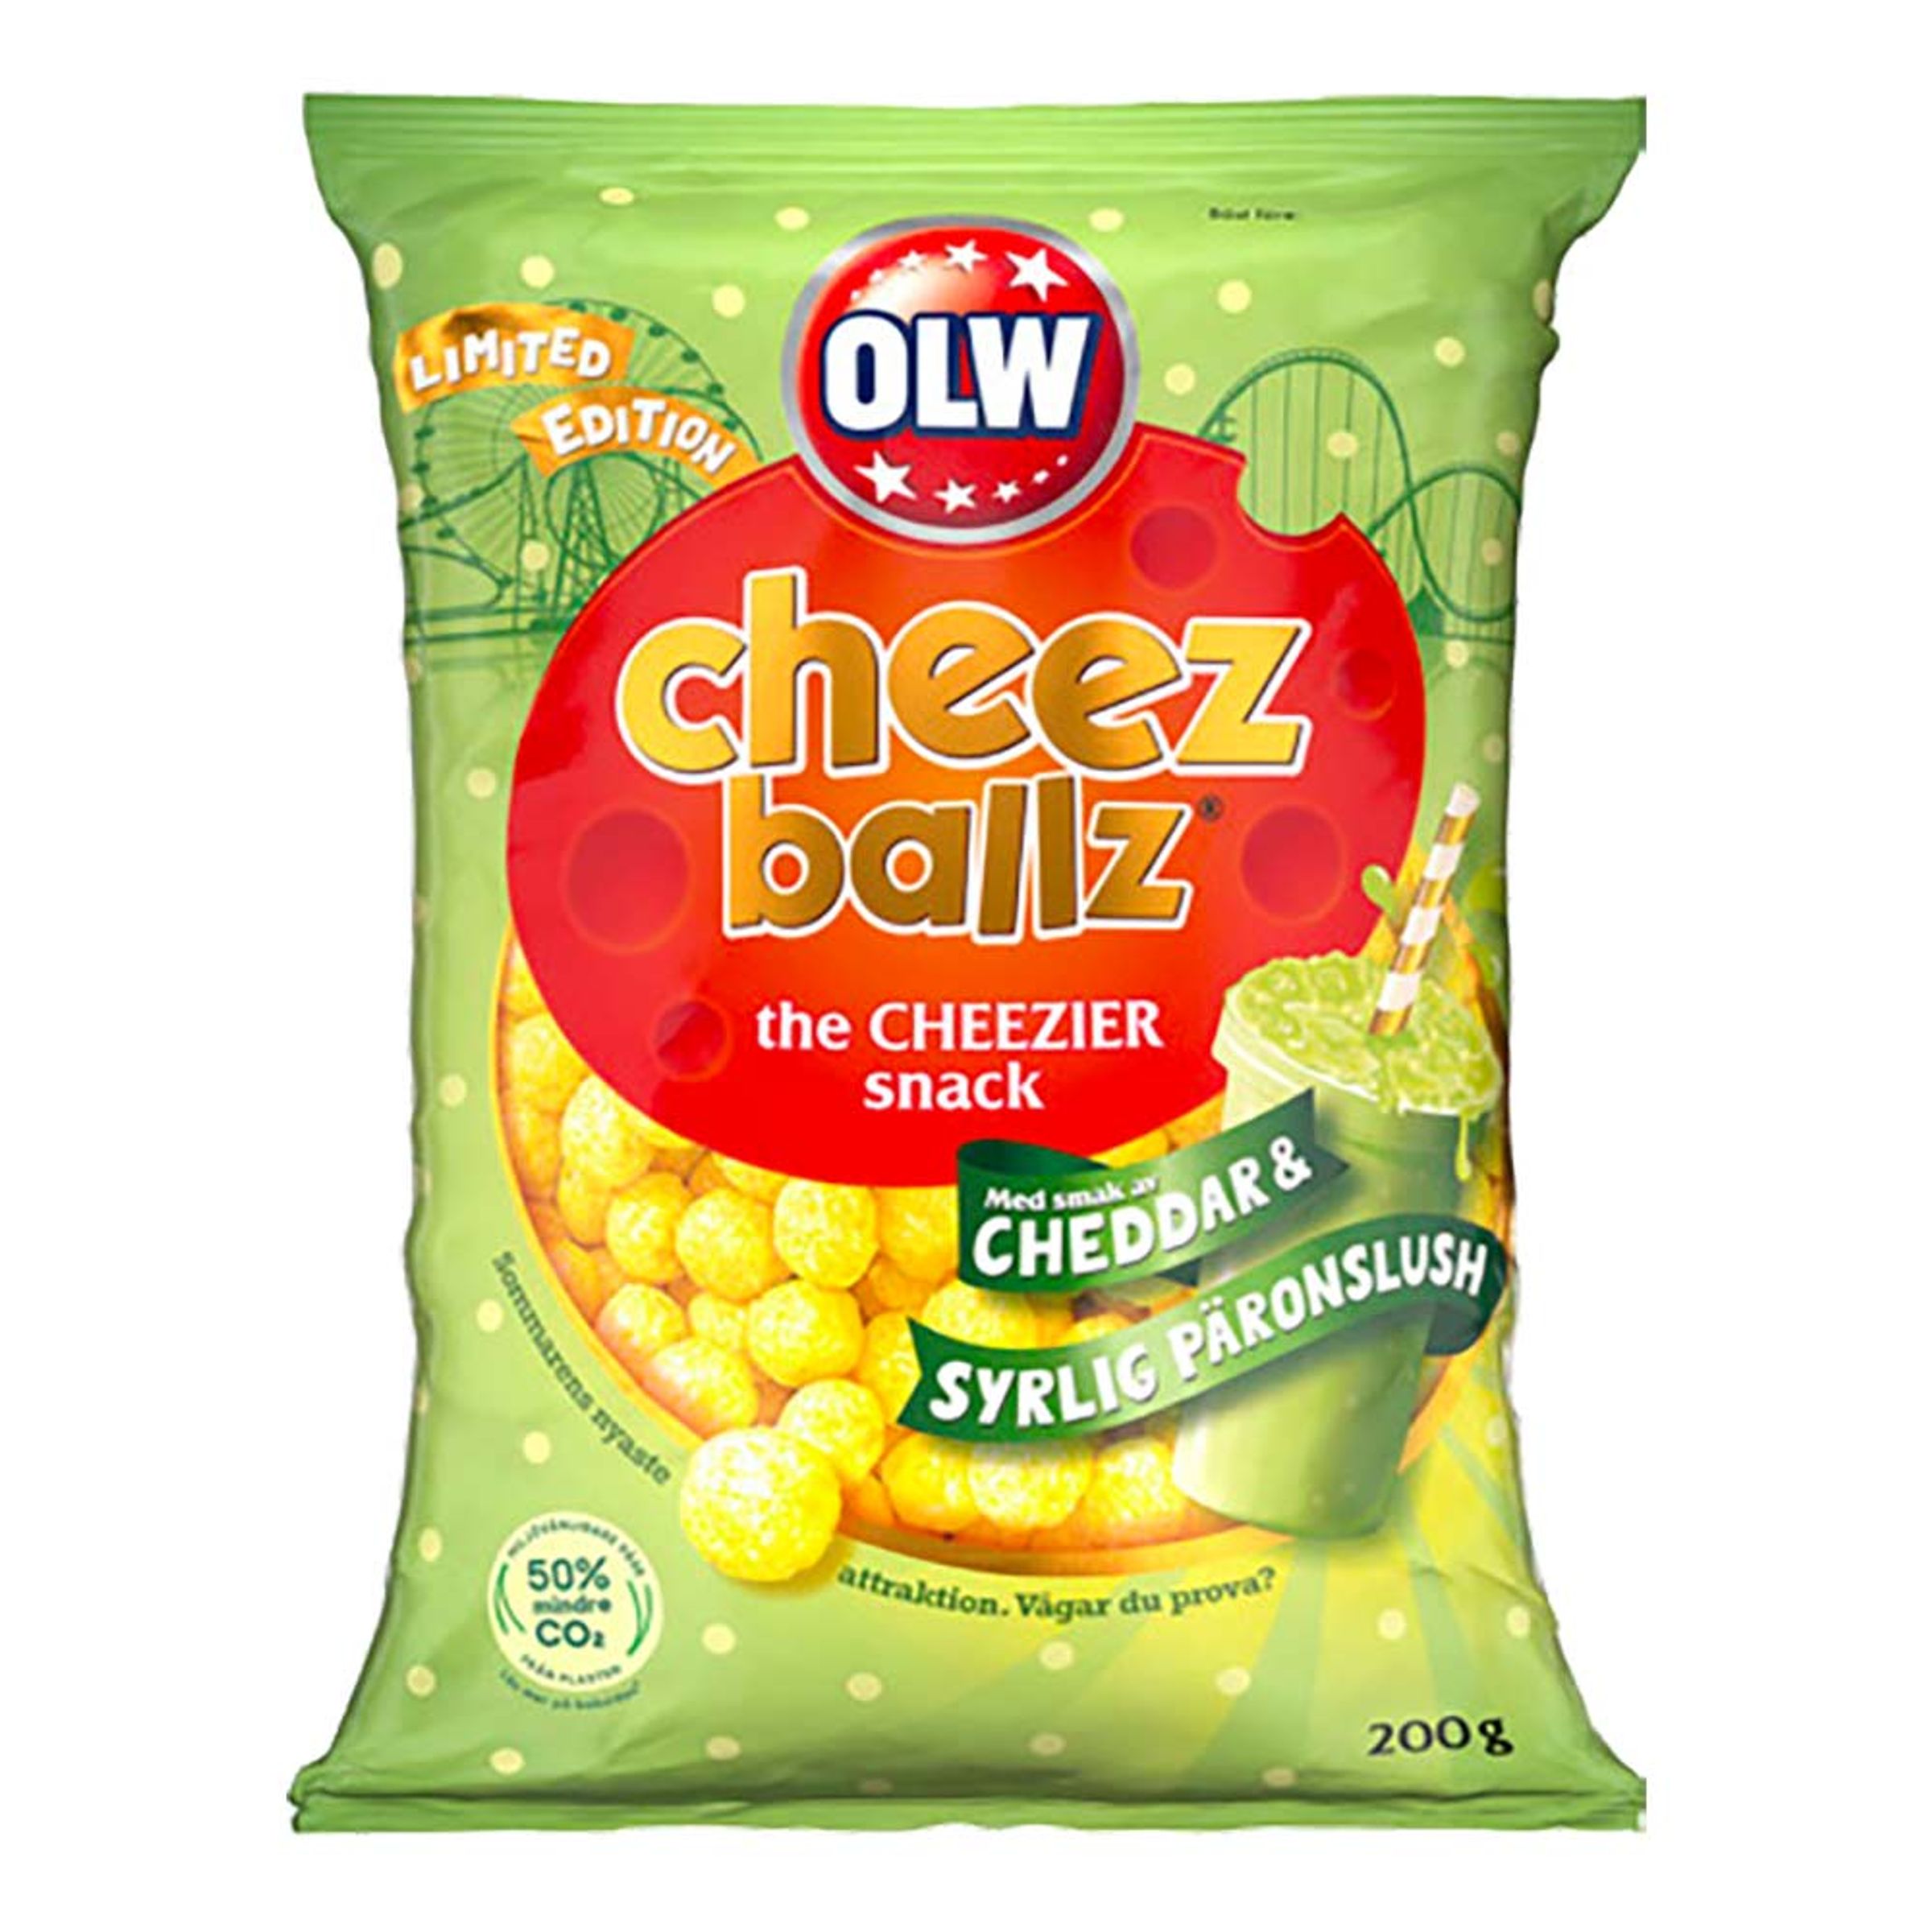 OLW Cheez Ballz Cheddar Syrlig Päronslush - 200 gram